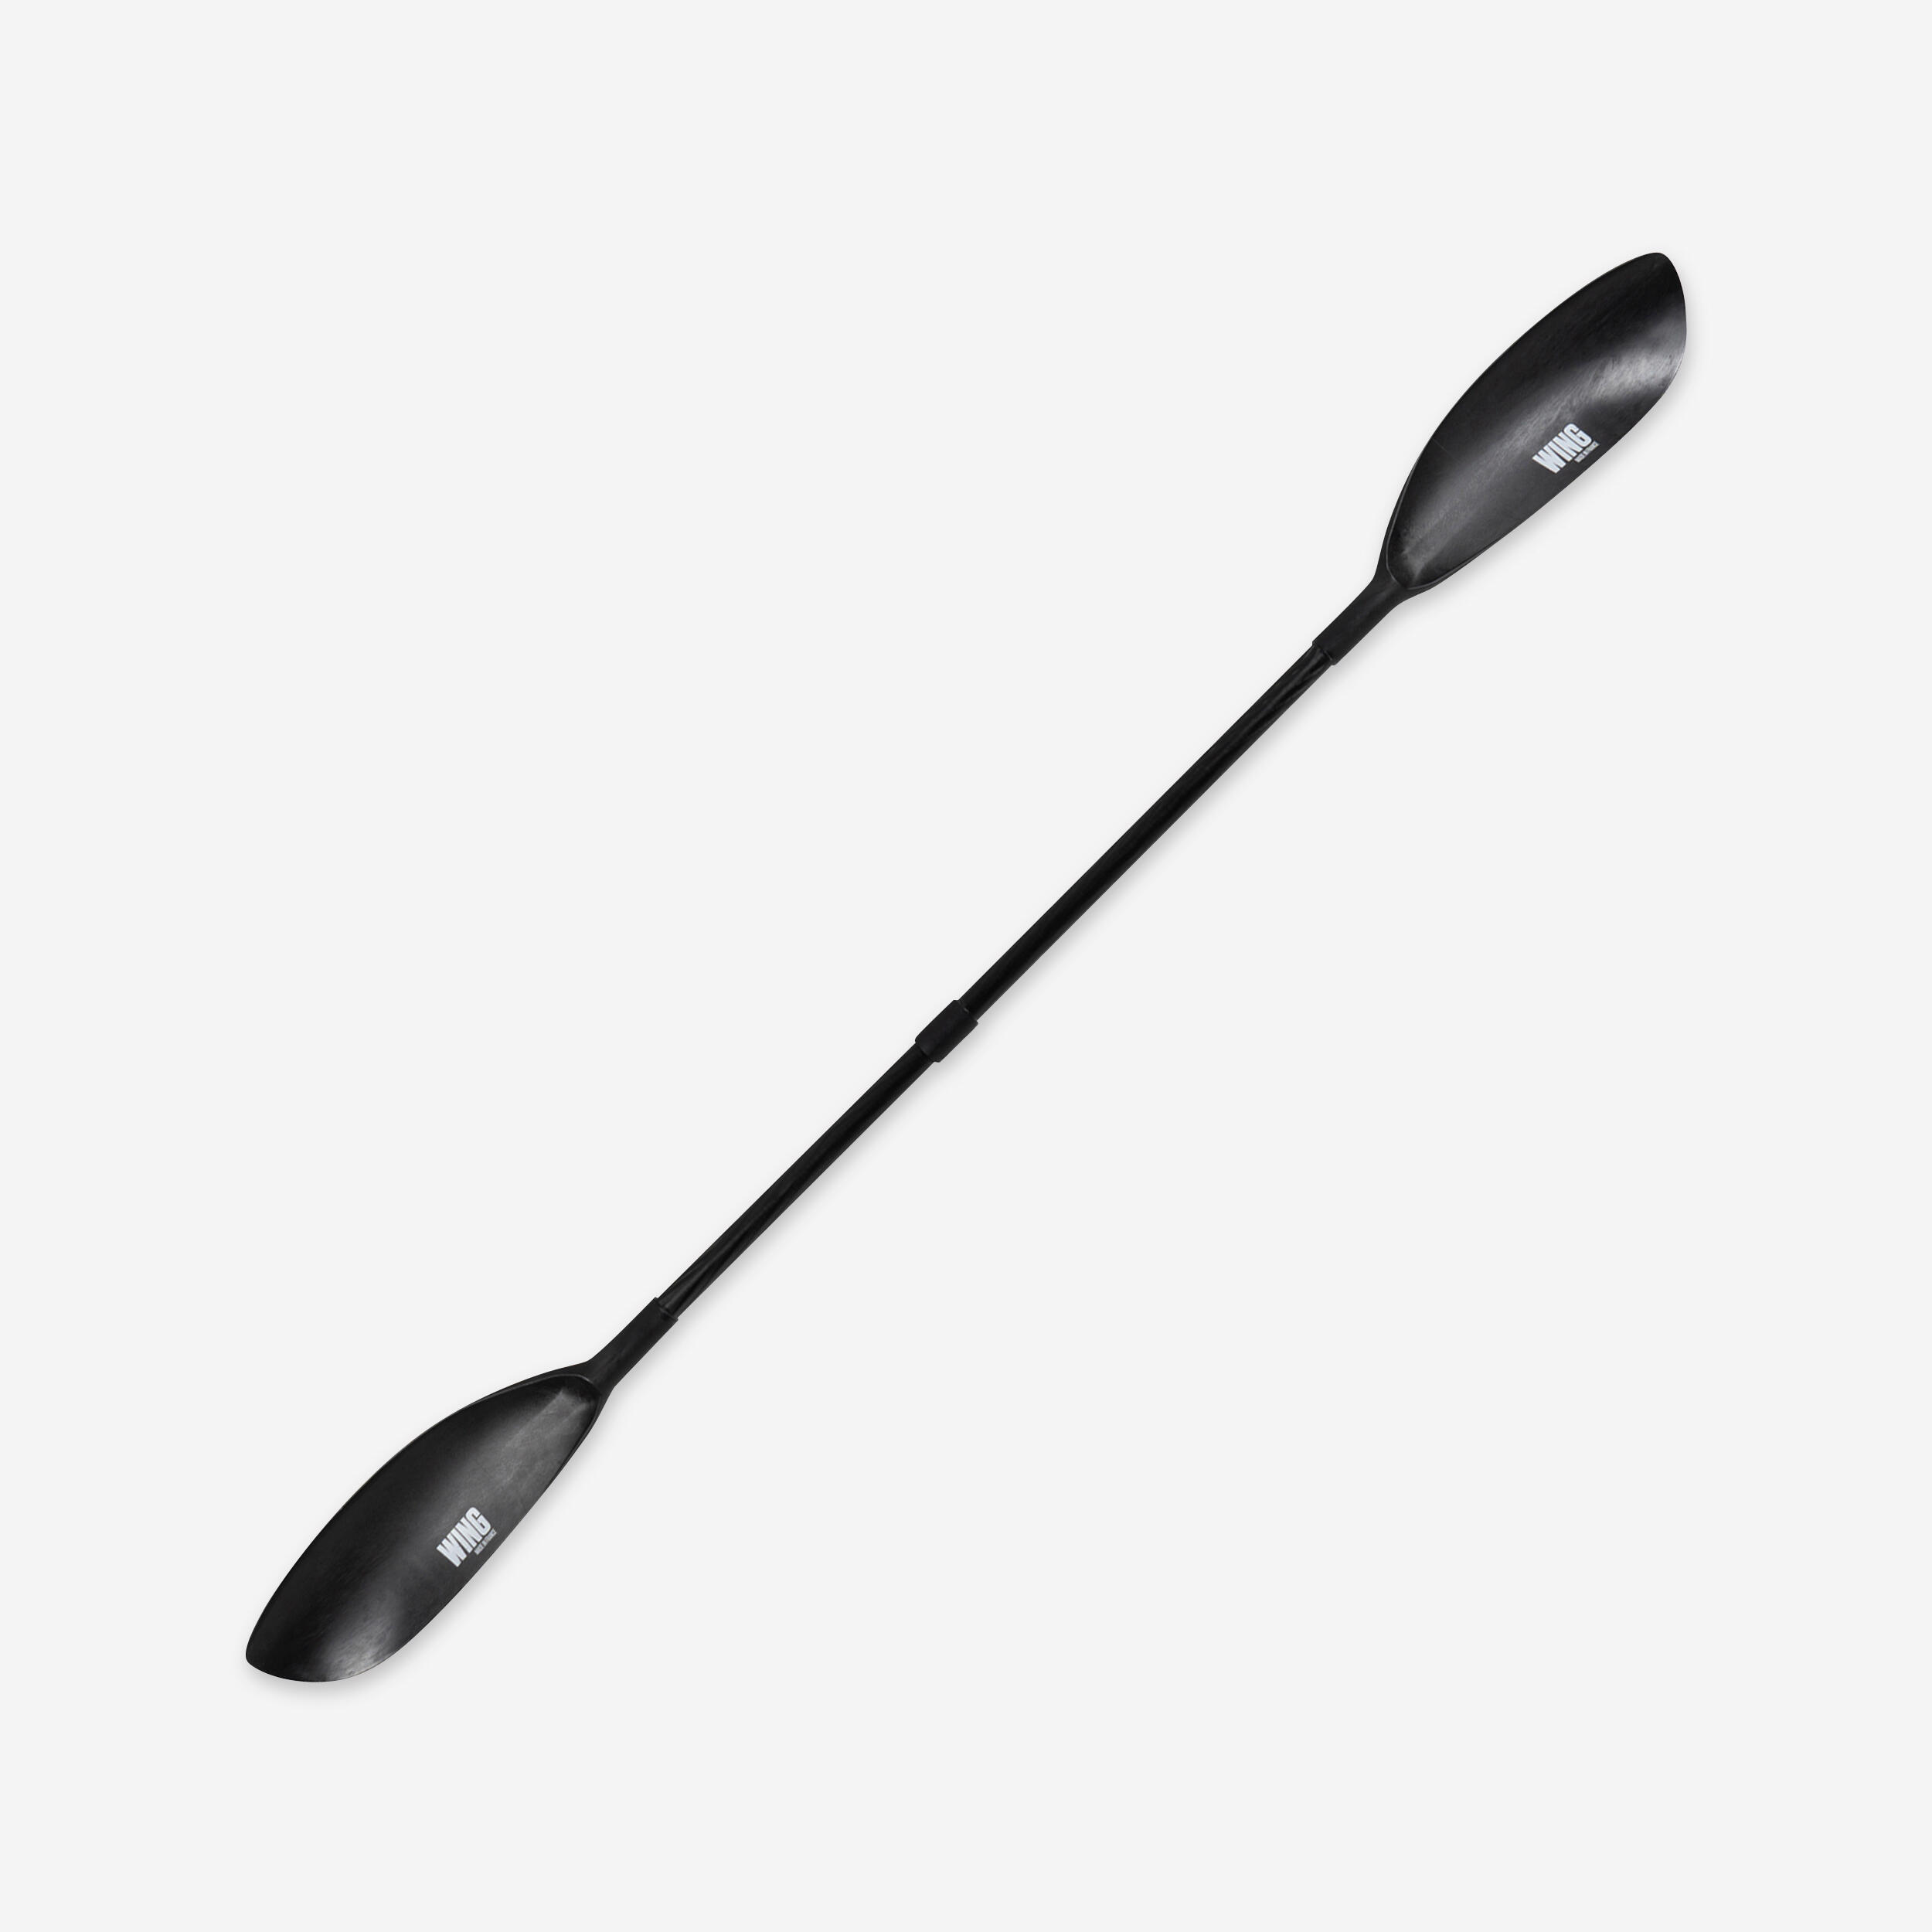 Kayak spoon paddle - carbon and fibreglass - adjustable / 2 sections - Rotomod 1/13